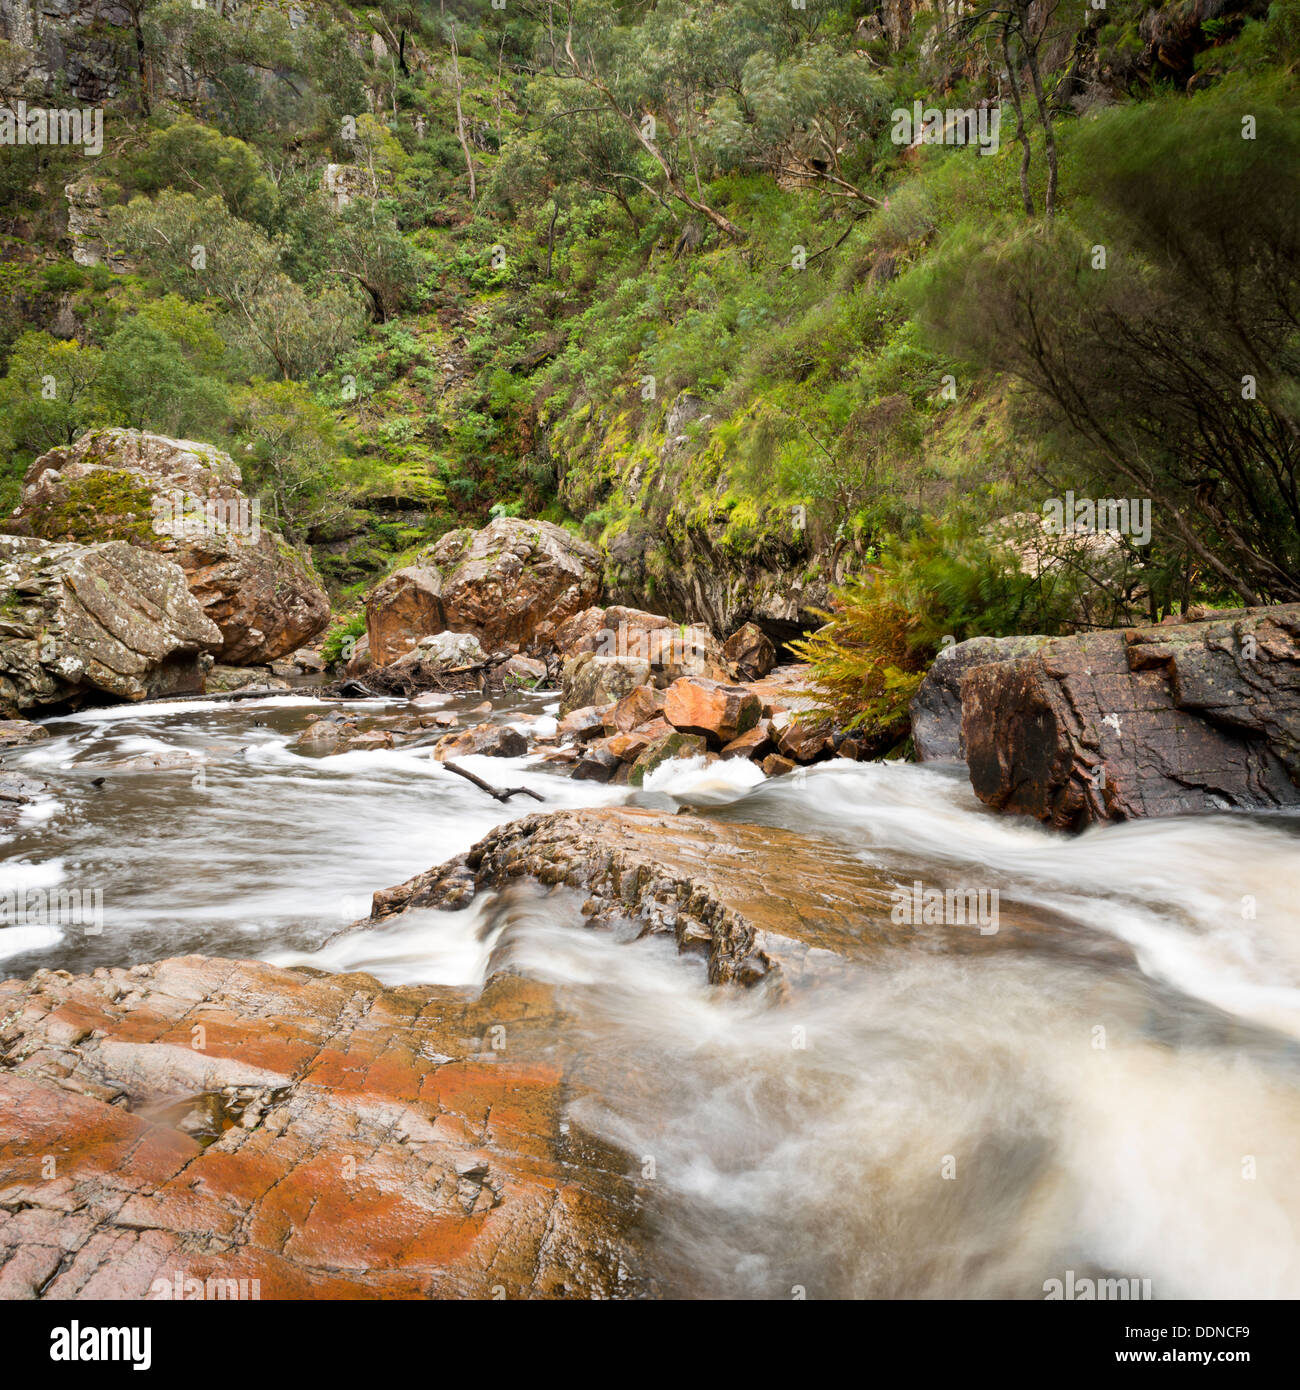 MacKenzie Falls waterfall in the Grampians region of Victoria, Australia Stock Photo